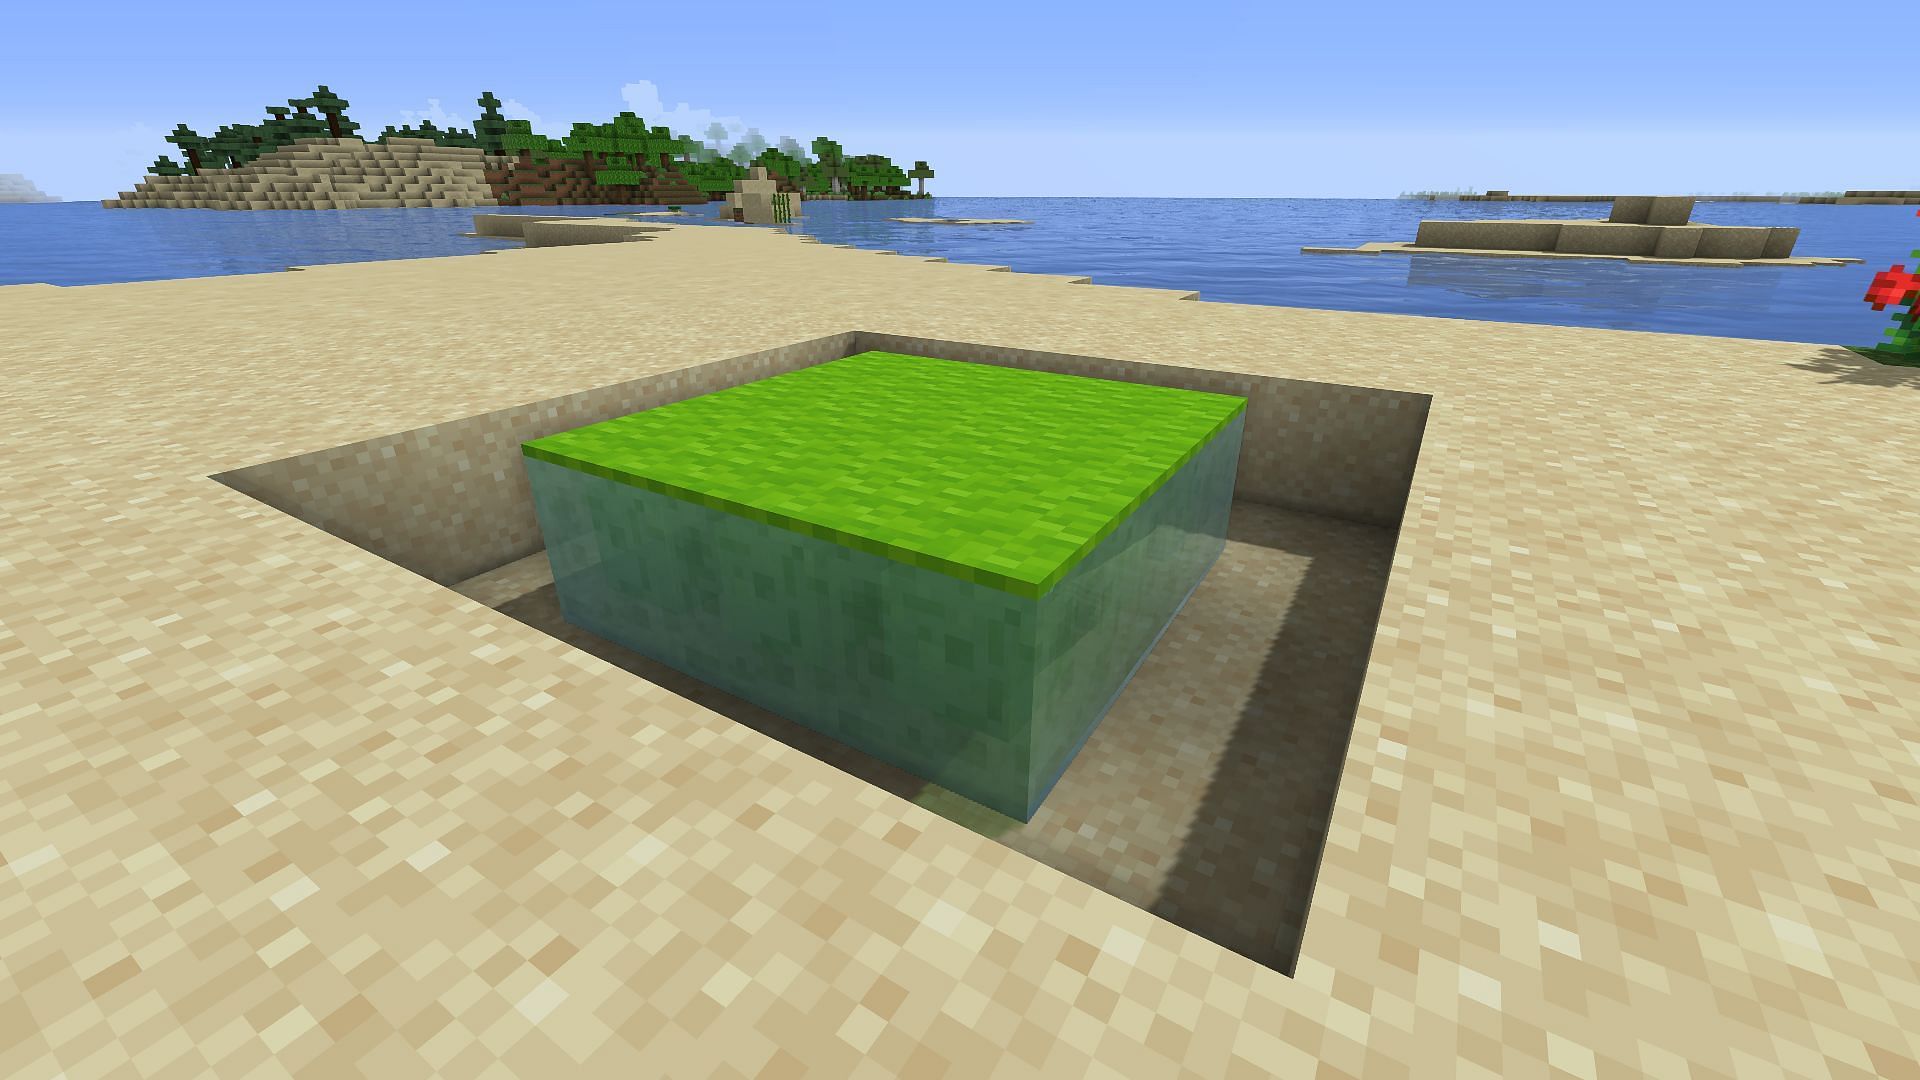 Slime blocks hidden under a carpet (Image via Minecraft)